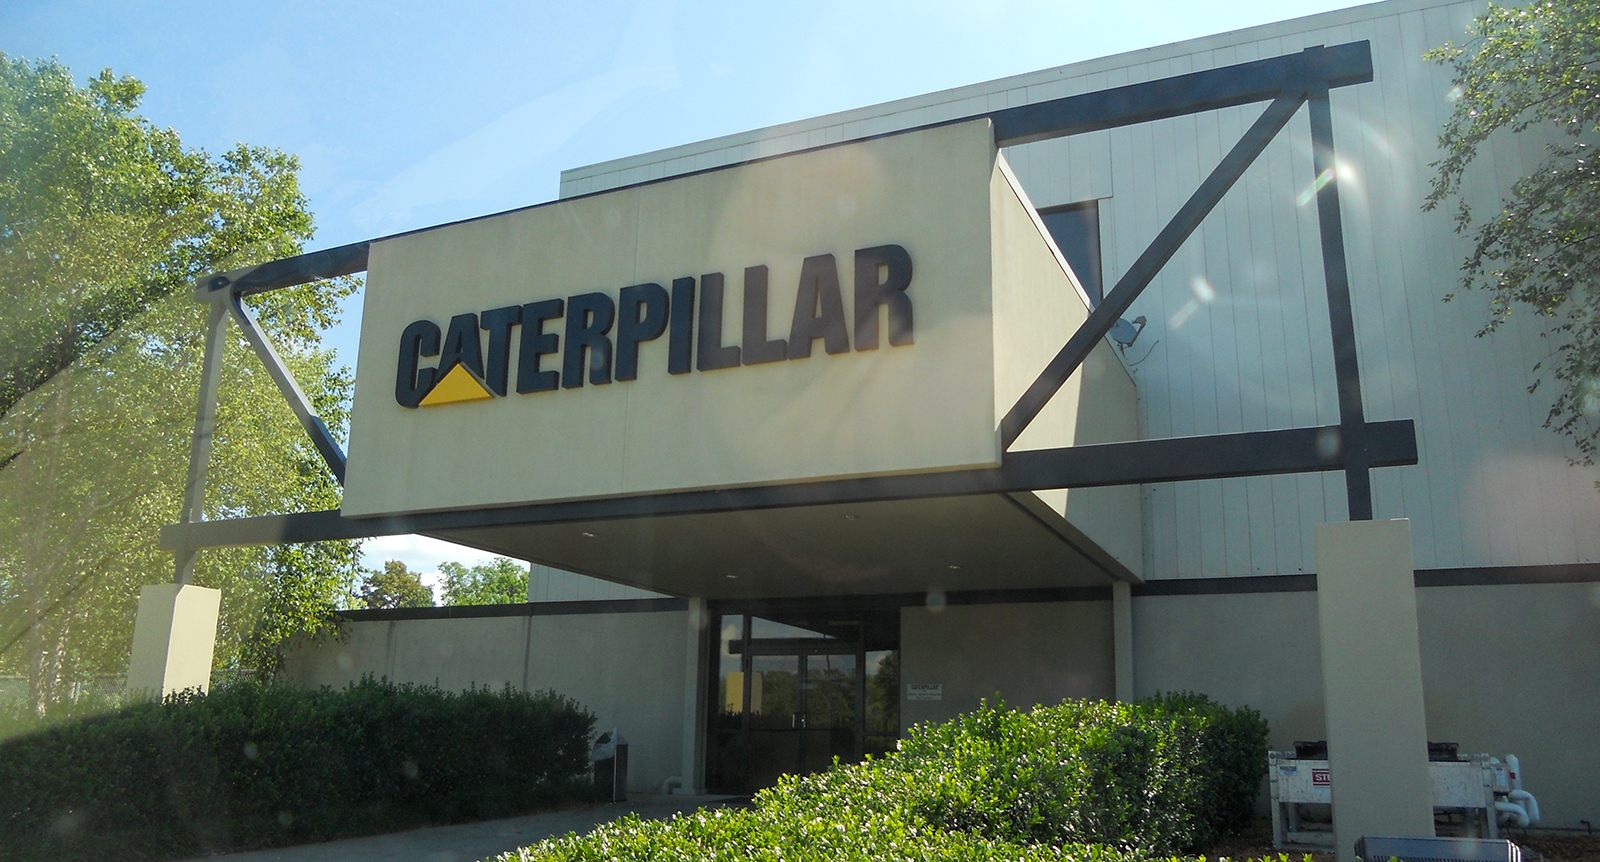 Caterpillar North American Road Grader Facility